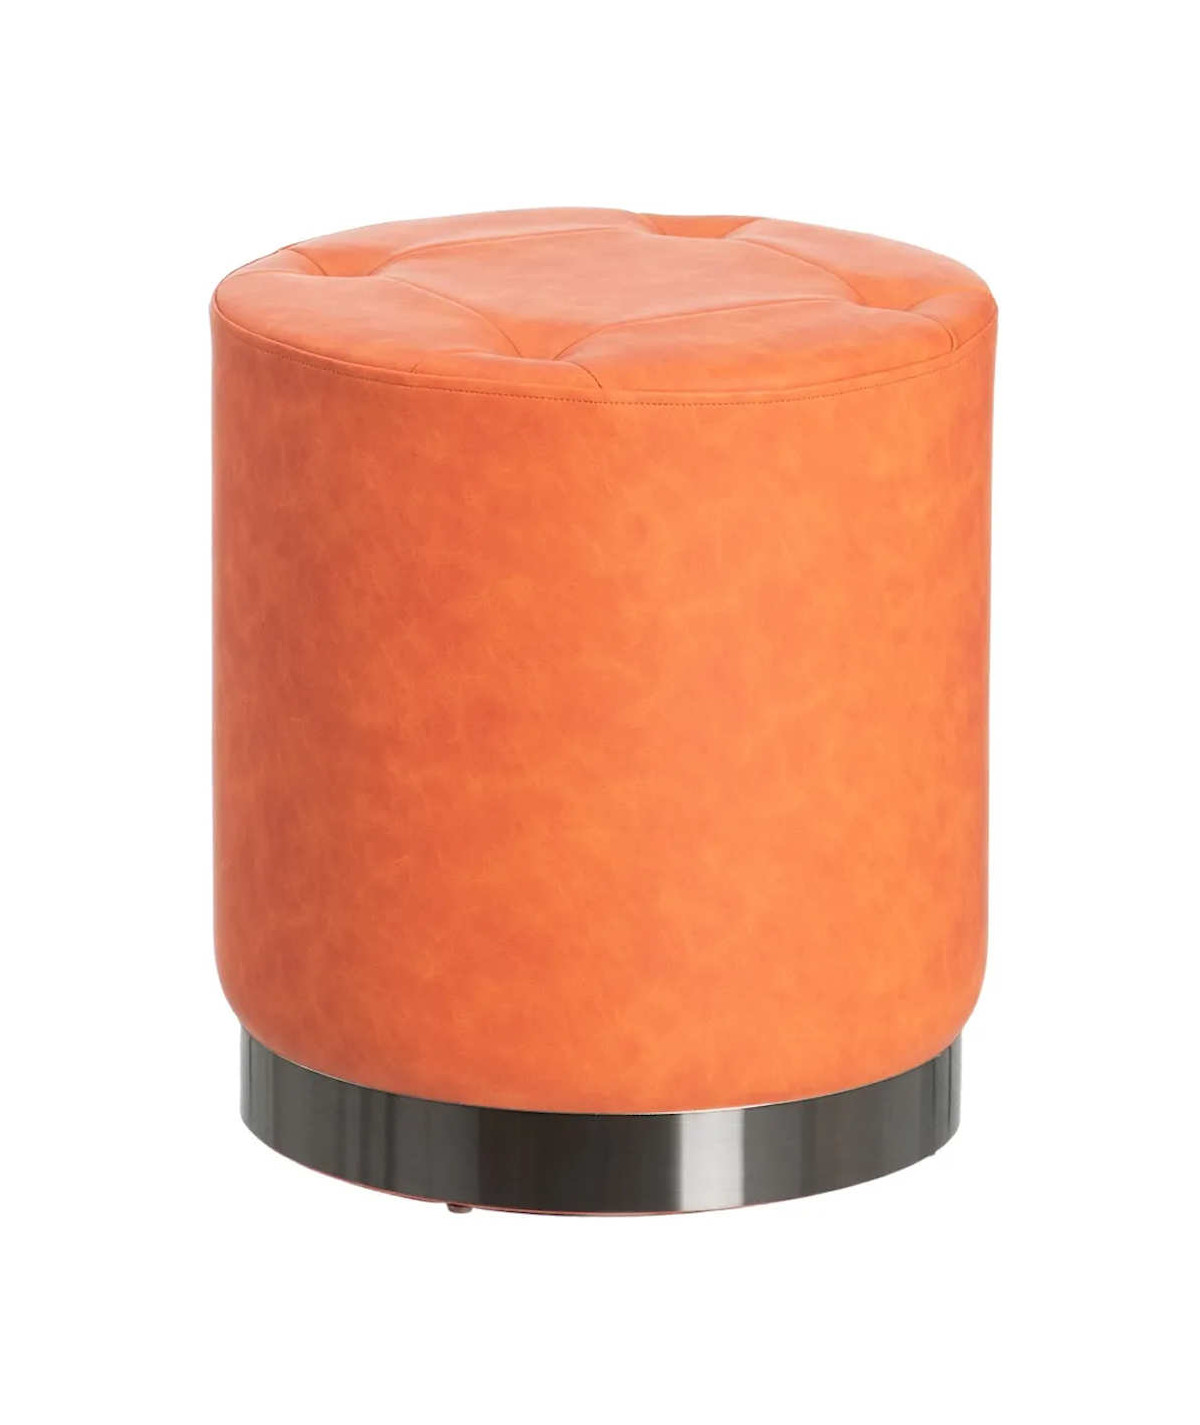 Pouf rond en similicuir orange Diam38cm - Foam - Yesdeko.com